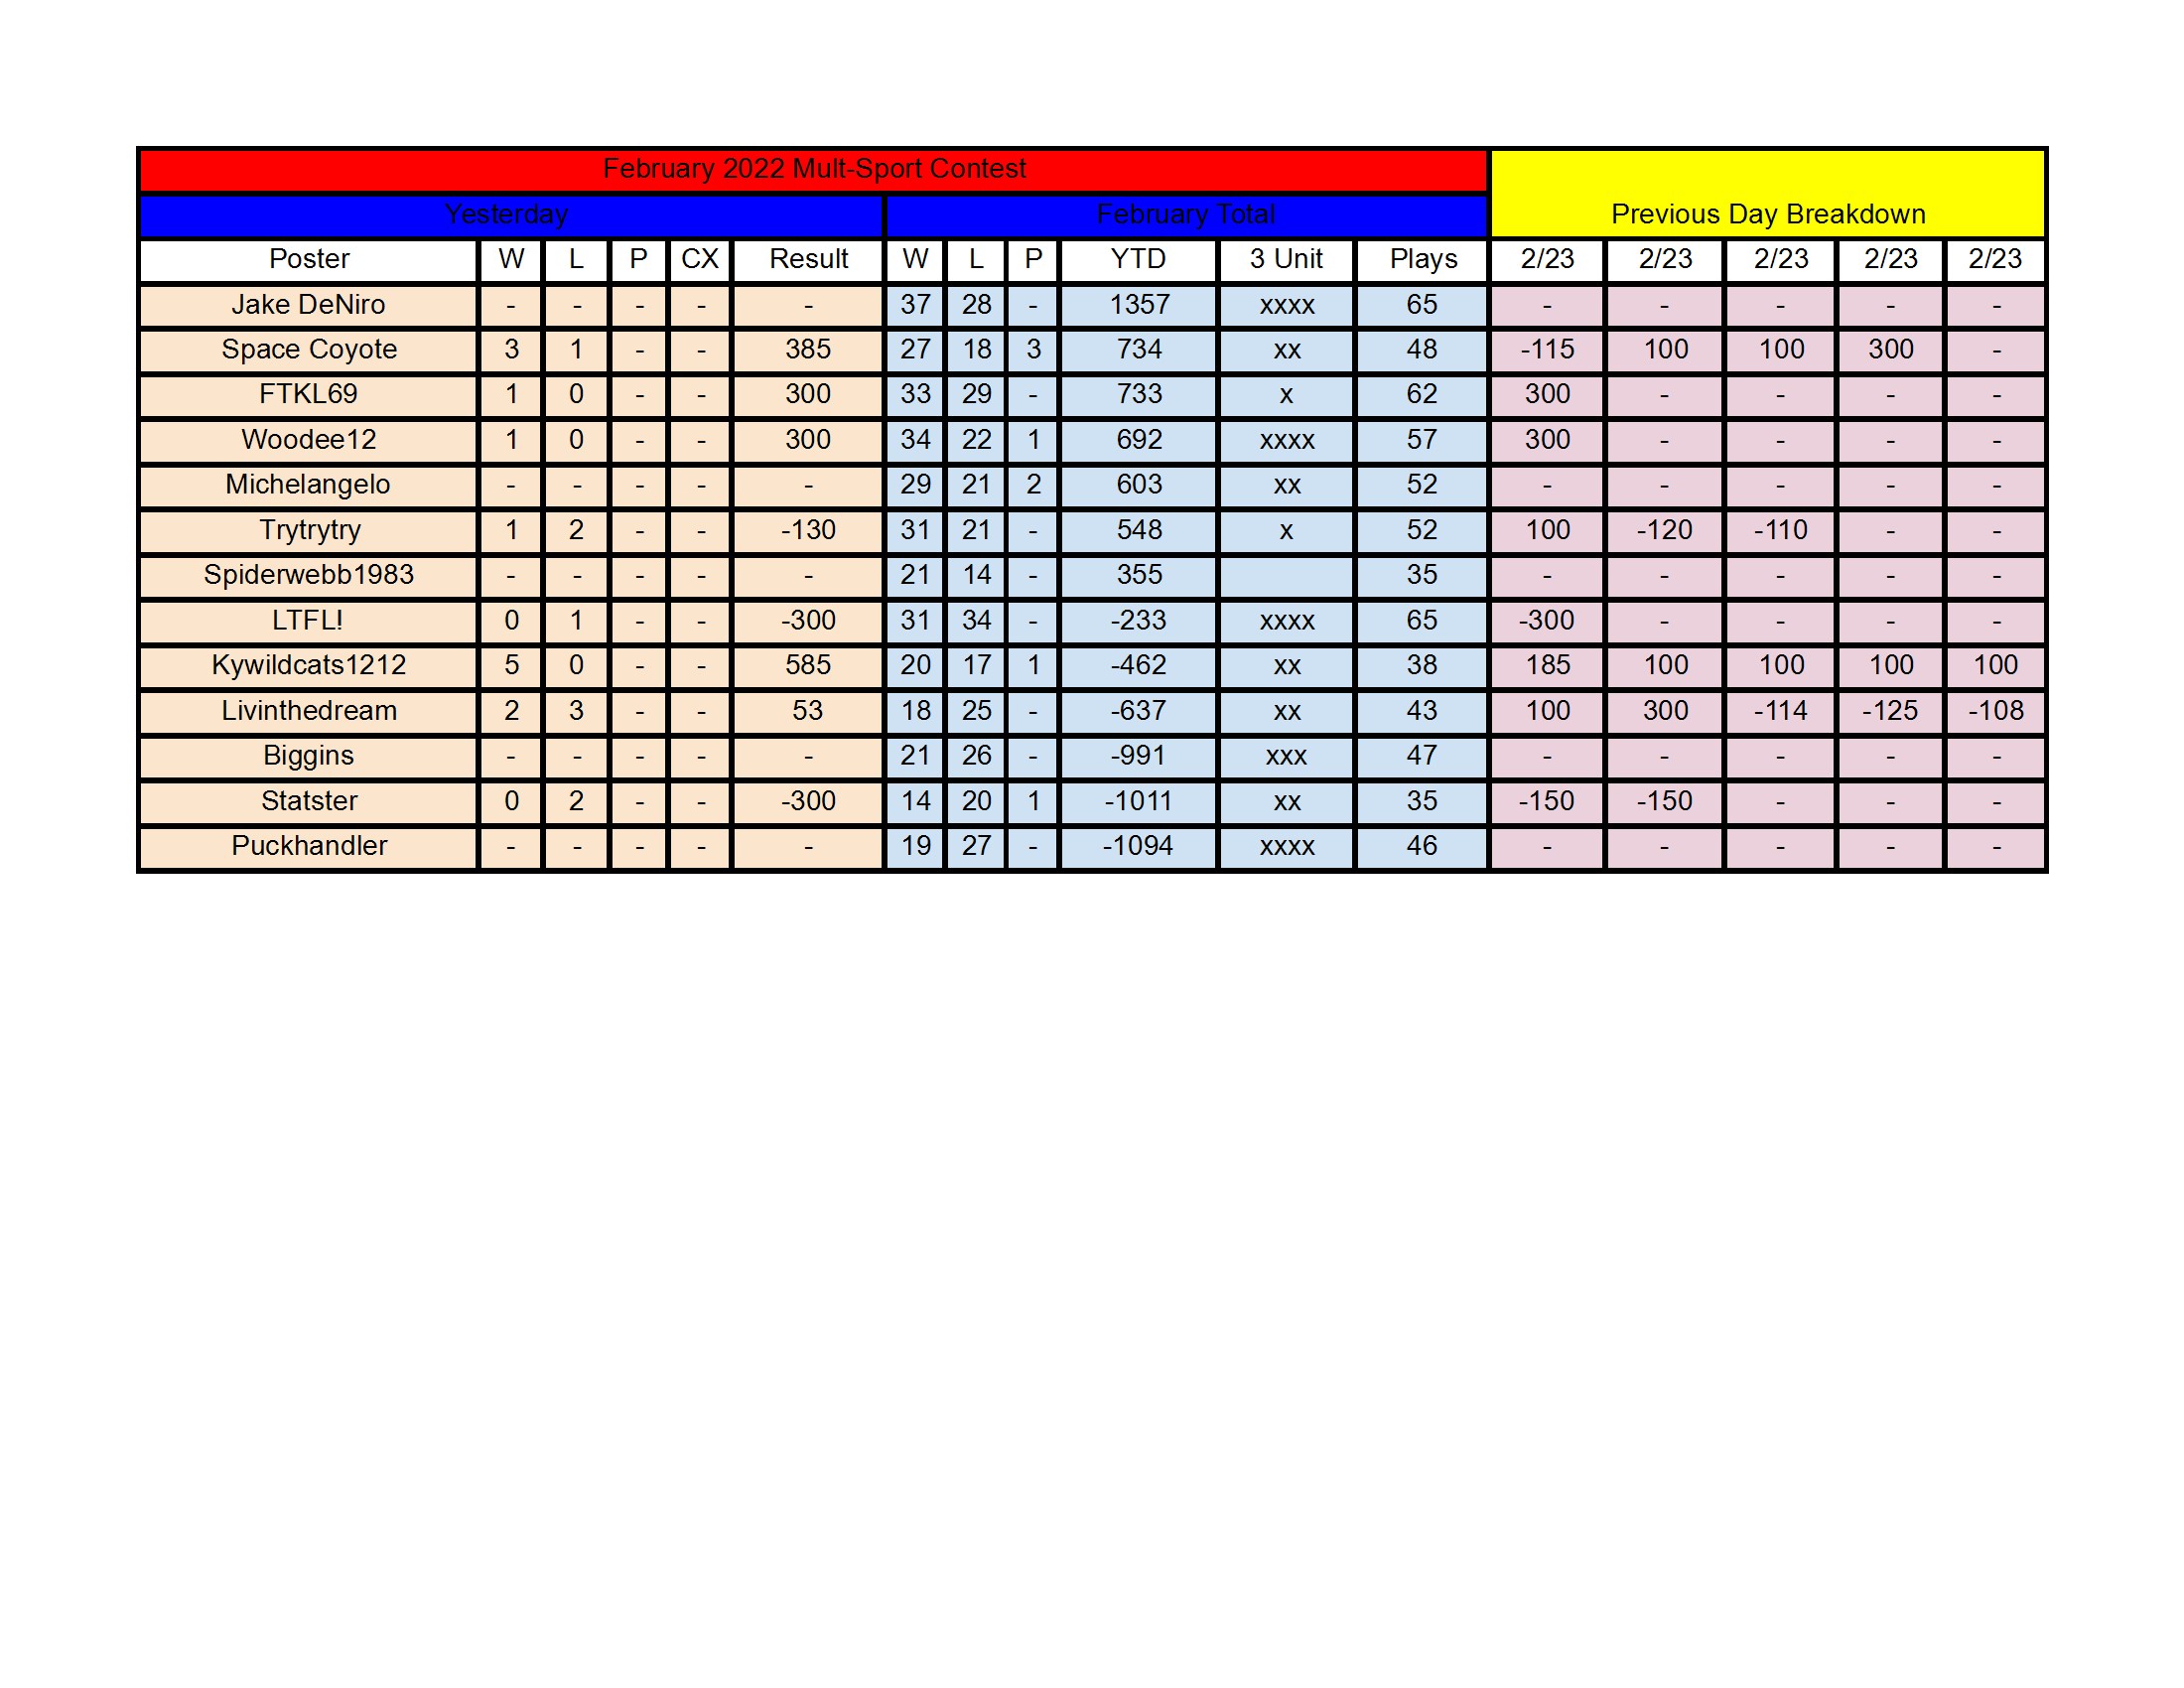 February Standings - 2_23 conv 1.jpeg